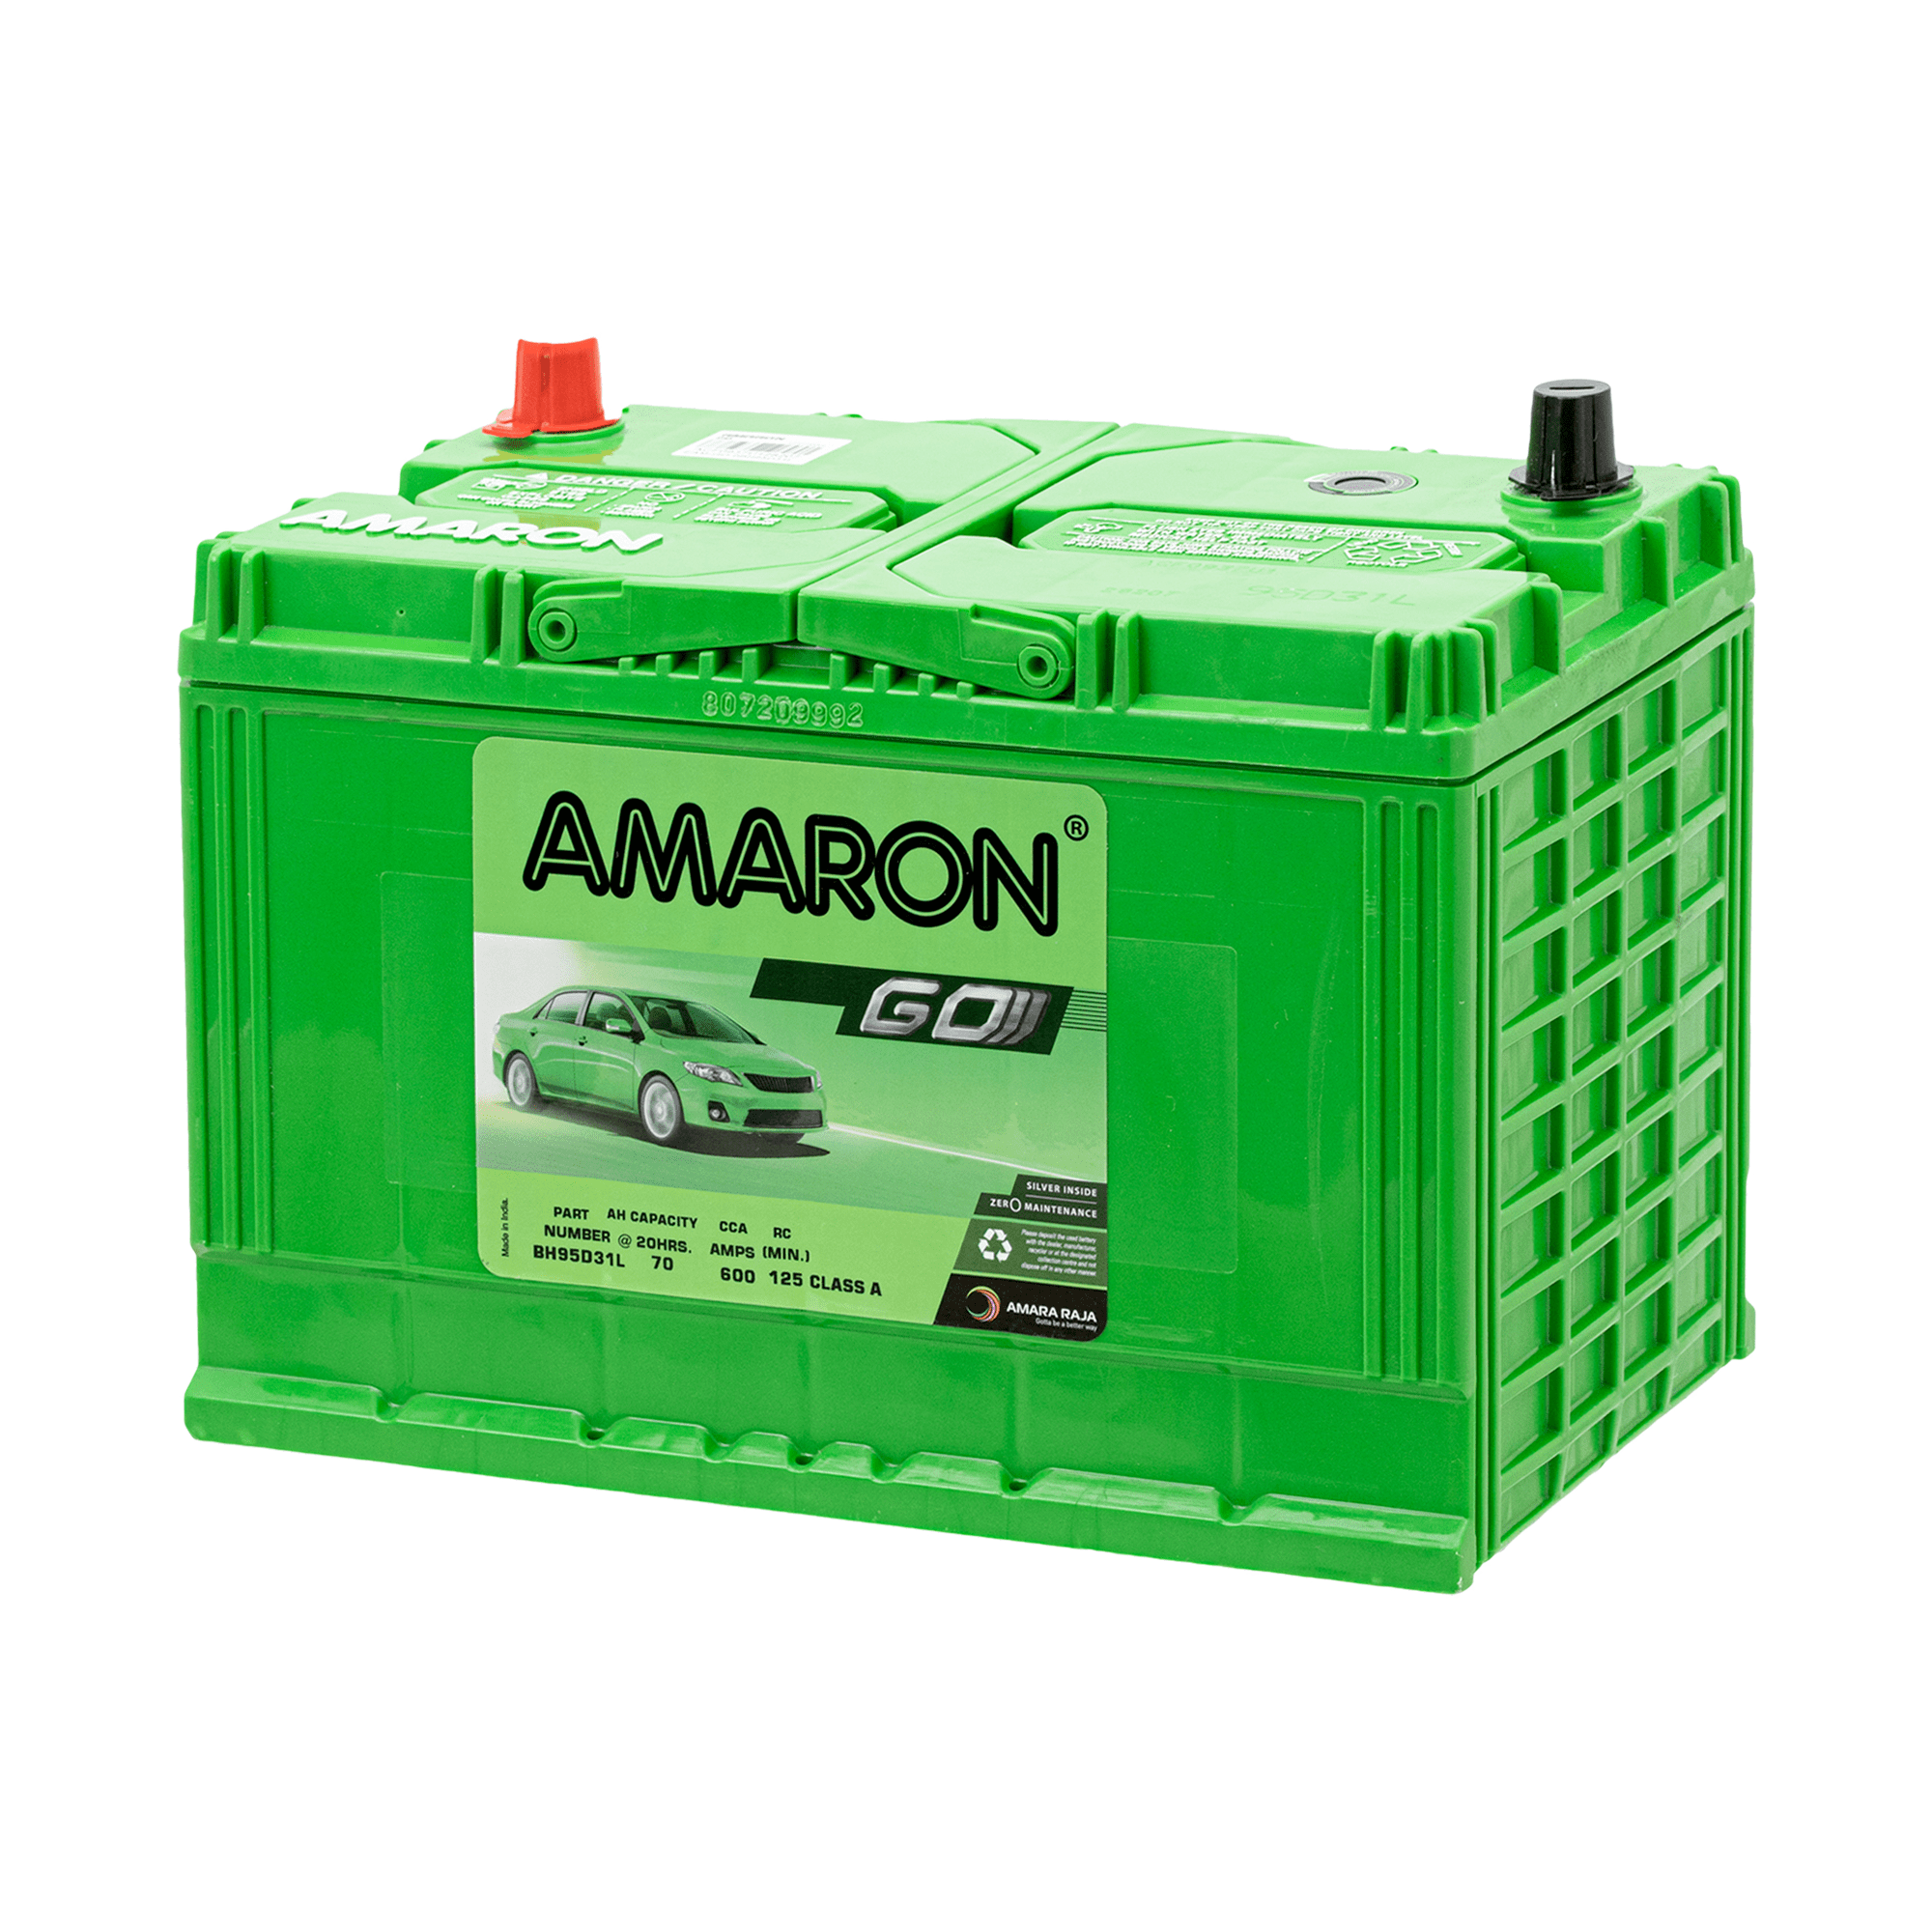 Battery supplies. АКБ amaron. Amaron r 60c. Amaron r 60. Size d31 Battery.